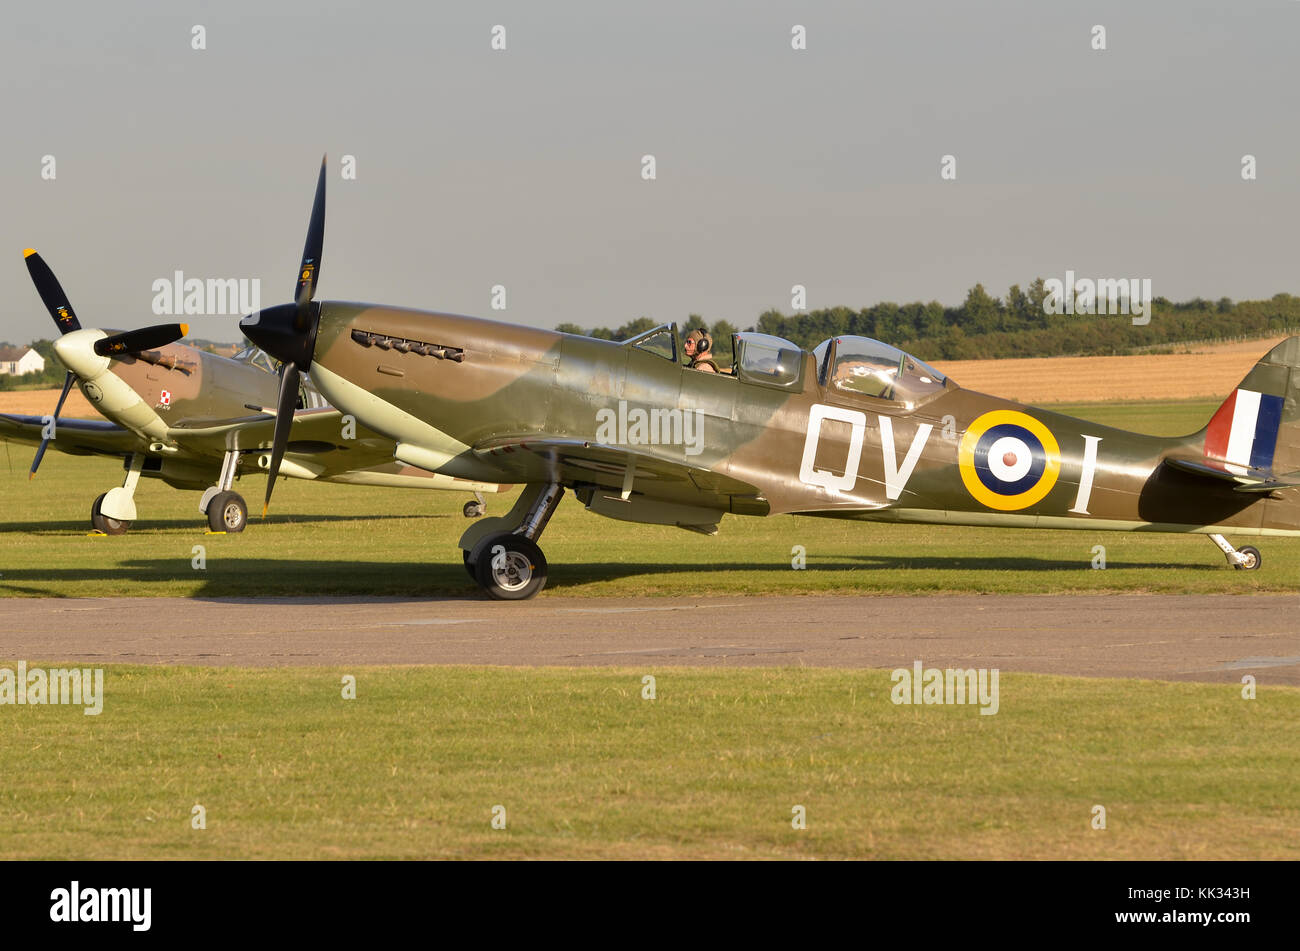 Spitfire Mk.IXT, RAF markings, Duxford, UK. Spitfire Mk. Vb parked behind. Stock Photo